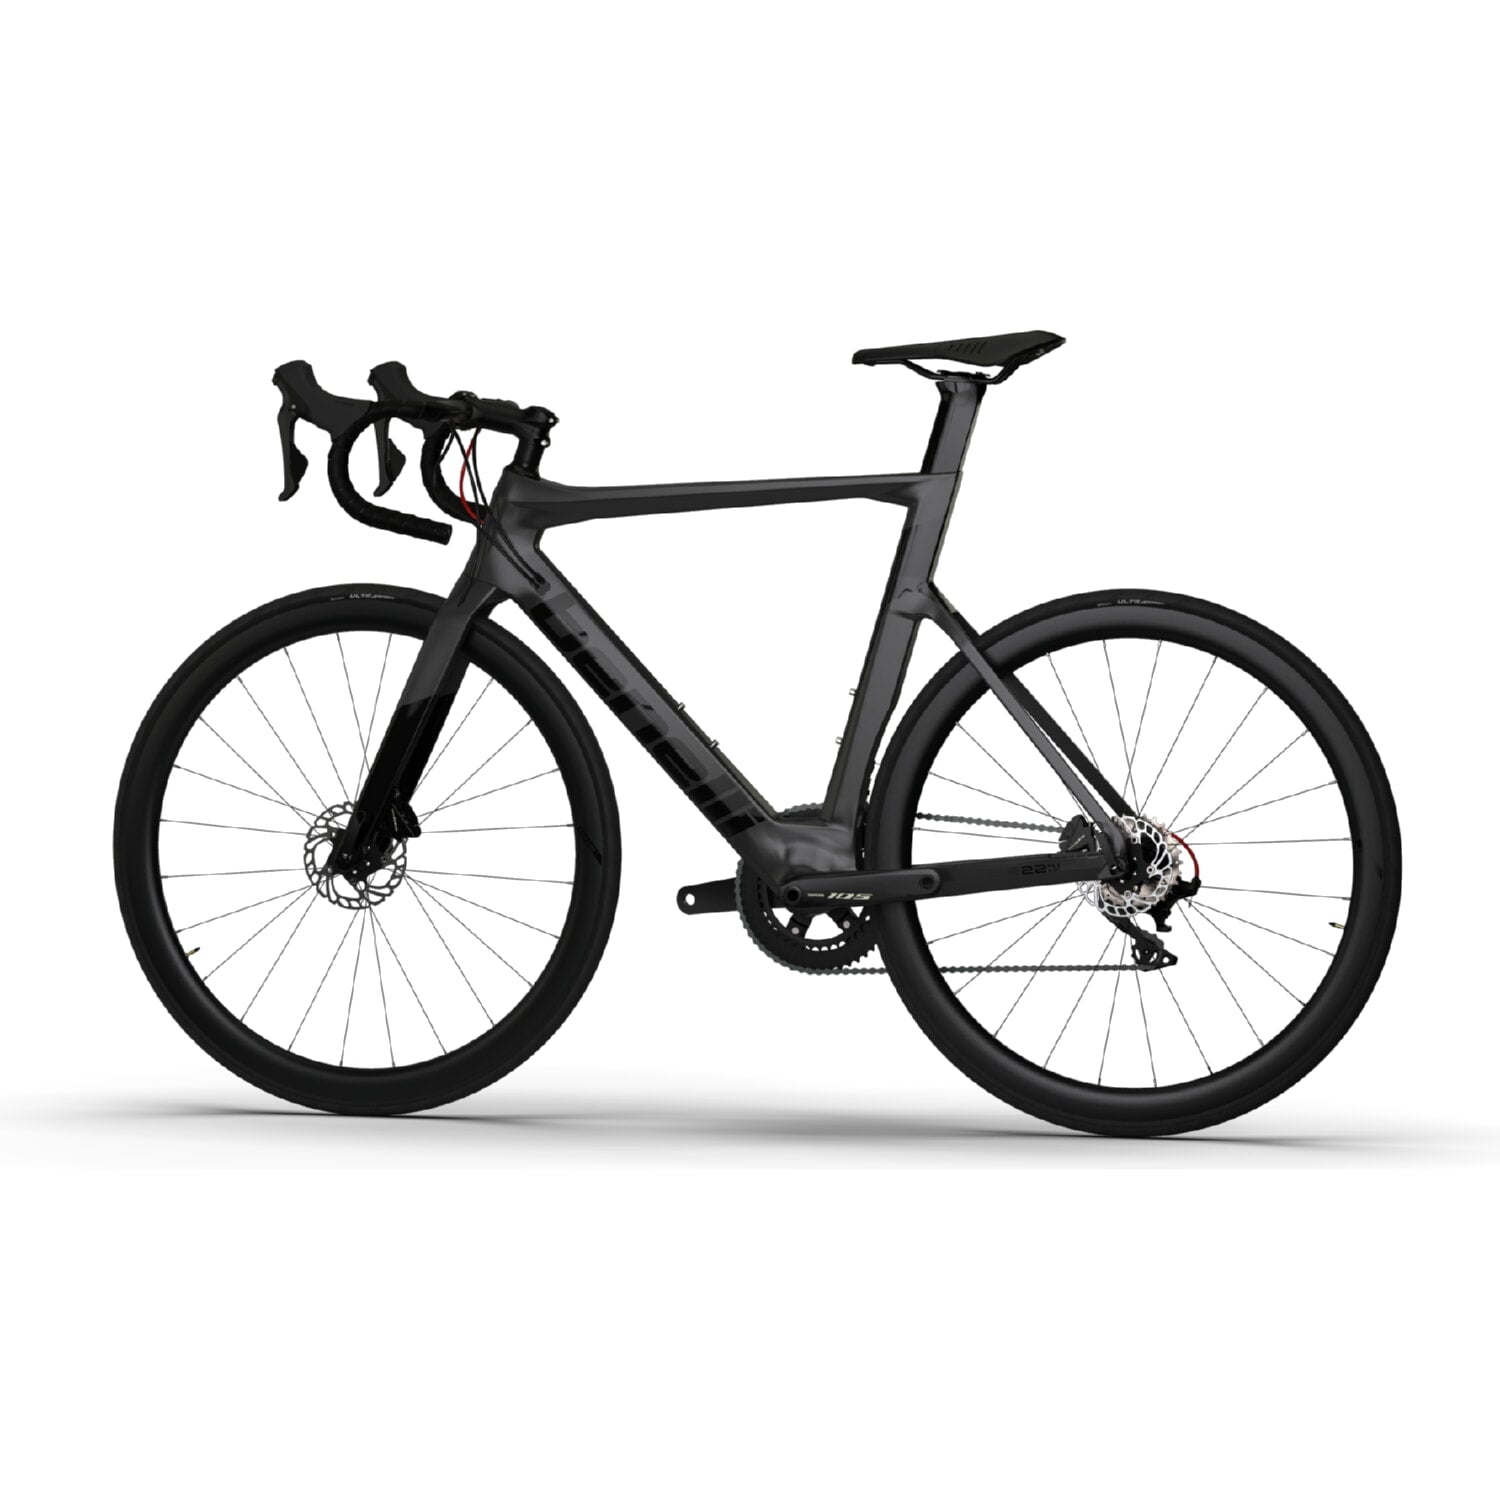 Bicicleta Gravel Benelli Carb. (G22 1.0 Adv Carb) Color Azul/Negro Tal